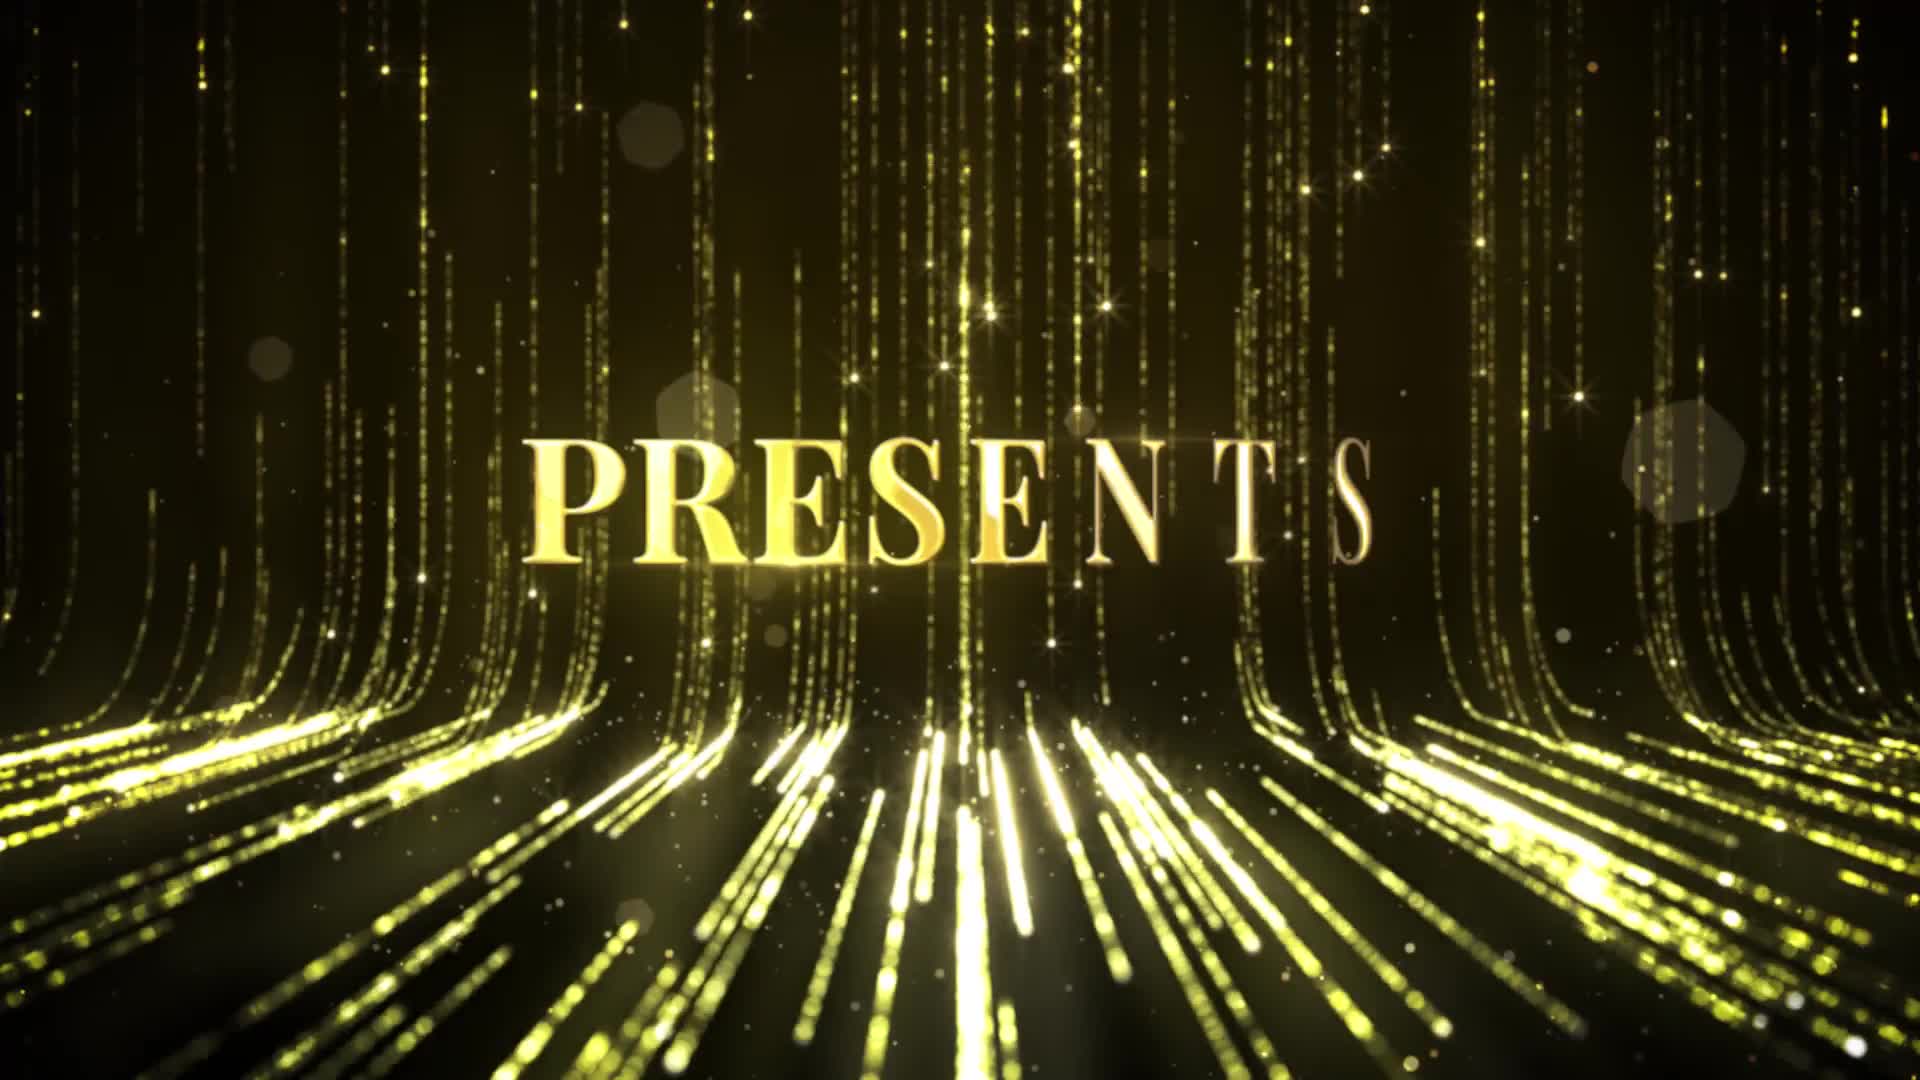 Awards Titles Premiere Pro Videohive 24604134 Premiere Pro Image 2